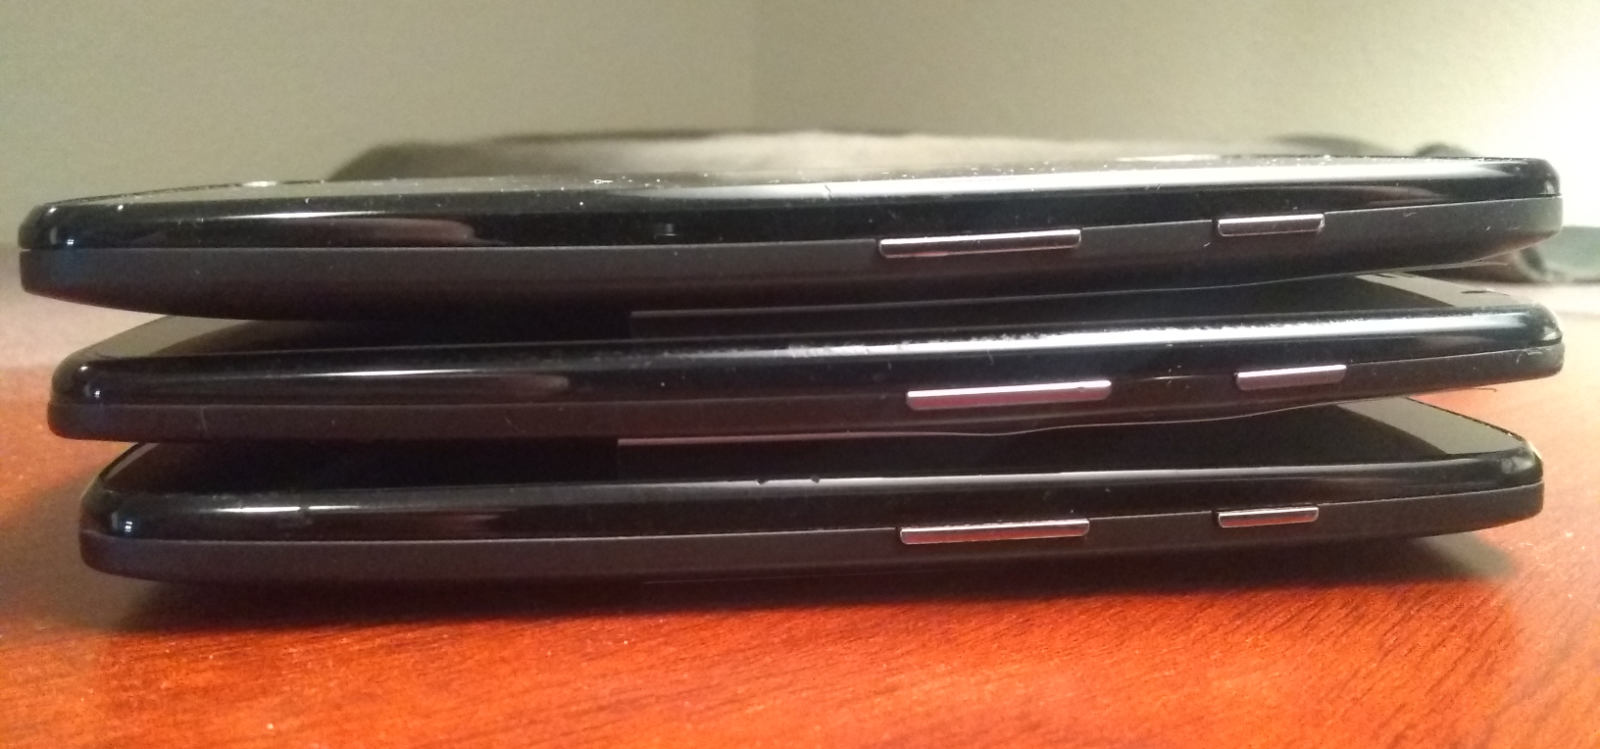 Stack of three different Moto phones